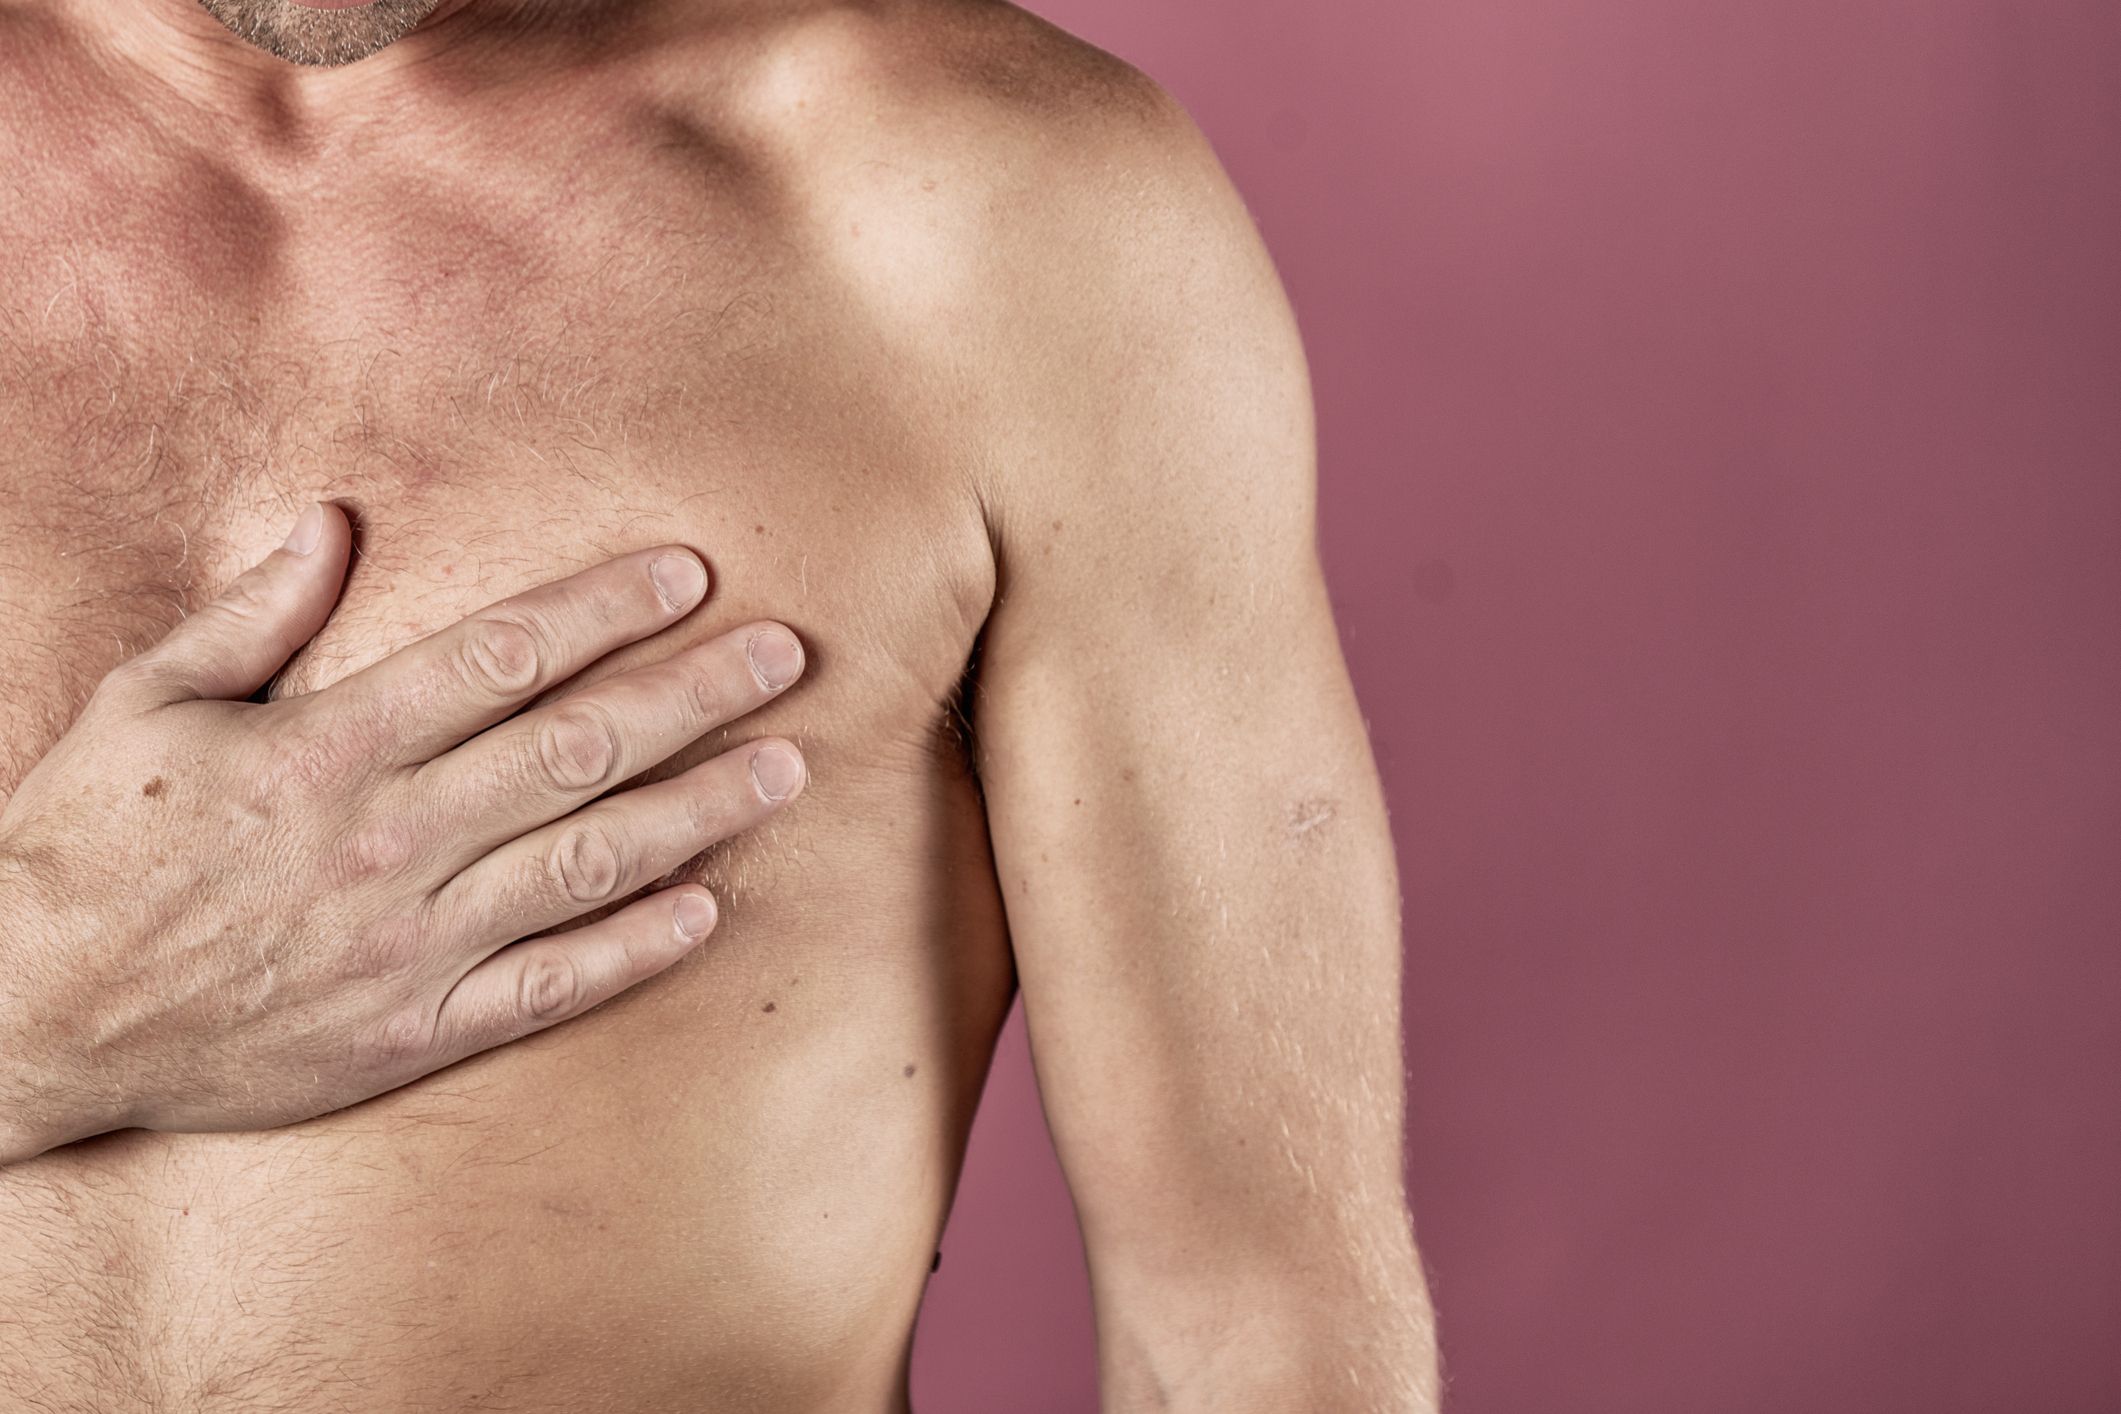 Why Do My Nipples Hurt? Sore Nipple Causes, Treatments